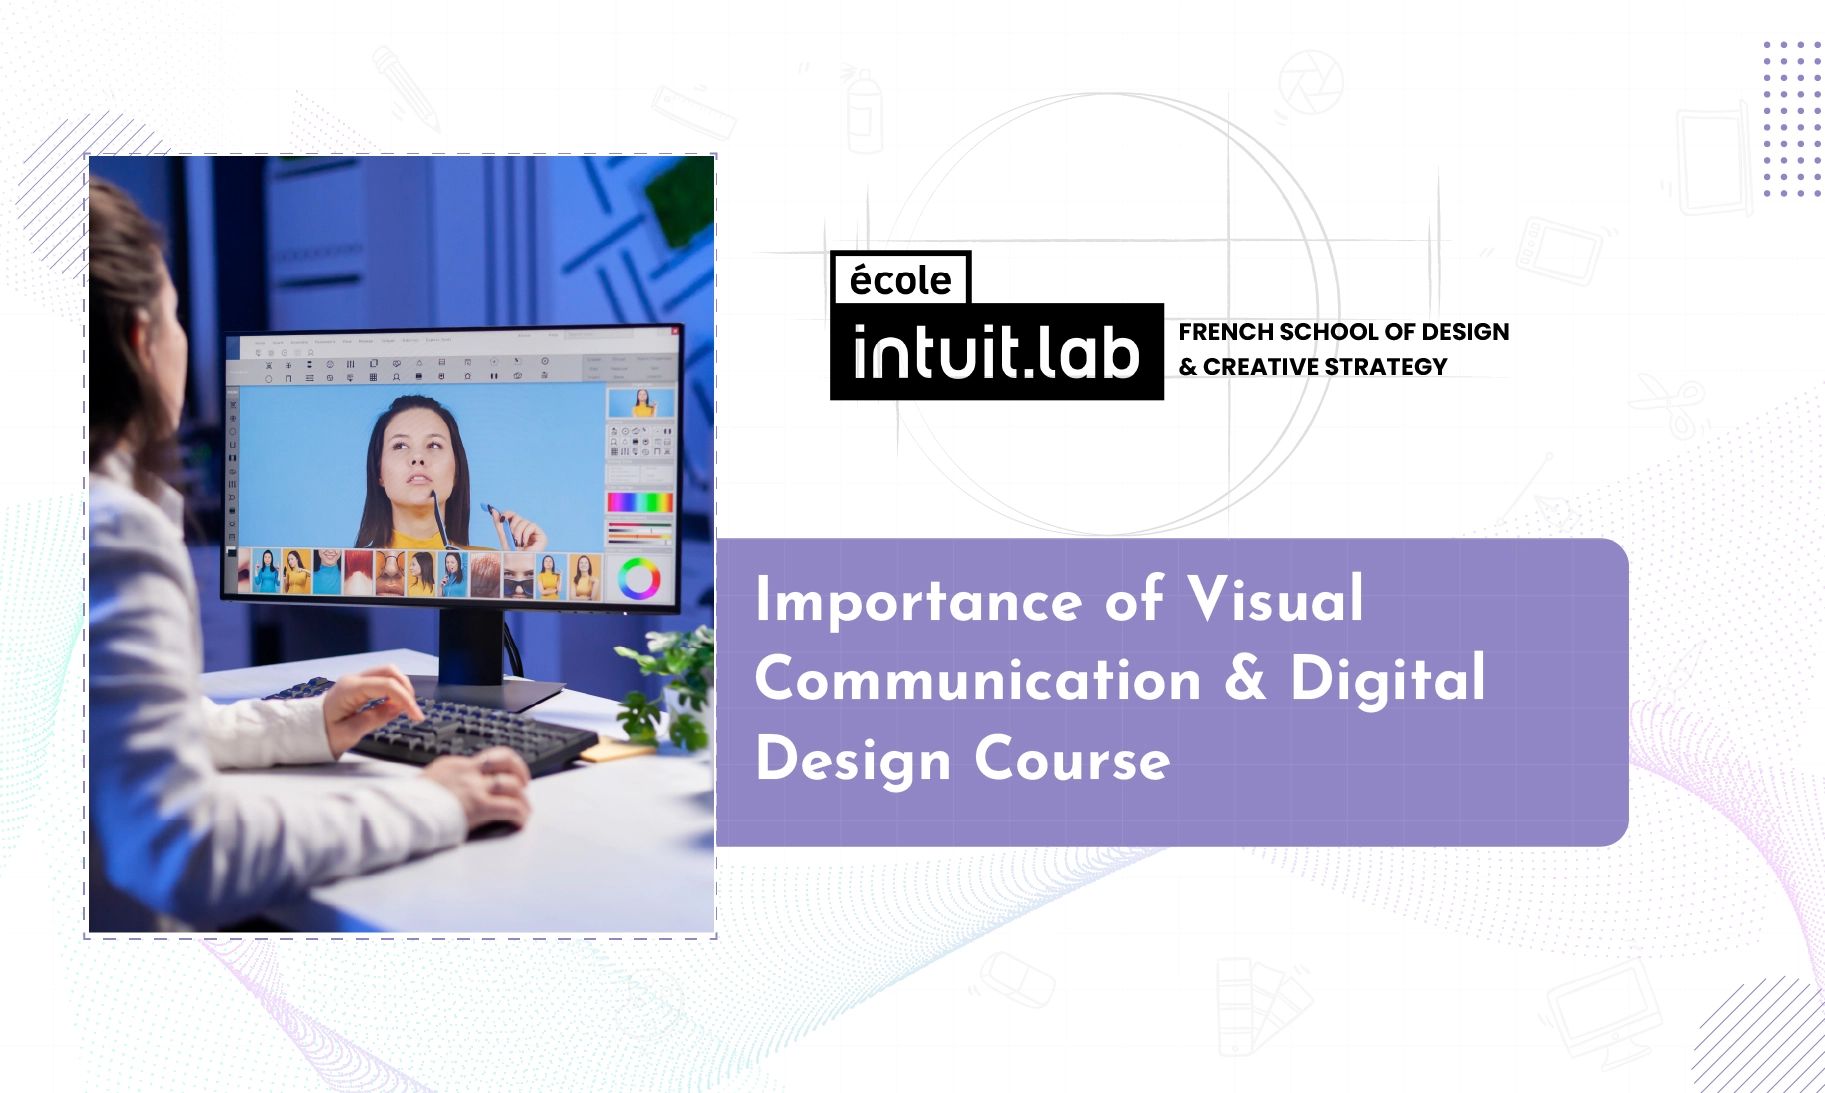 Importance of Visual Communication & Digital Design Course